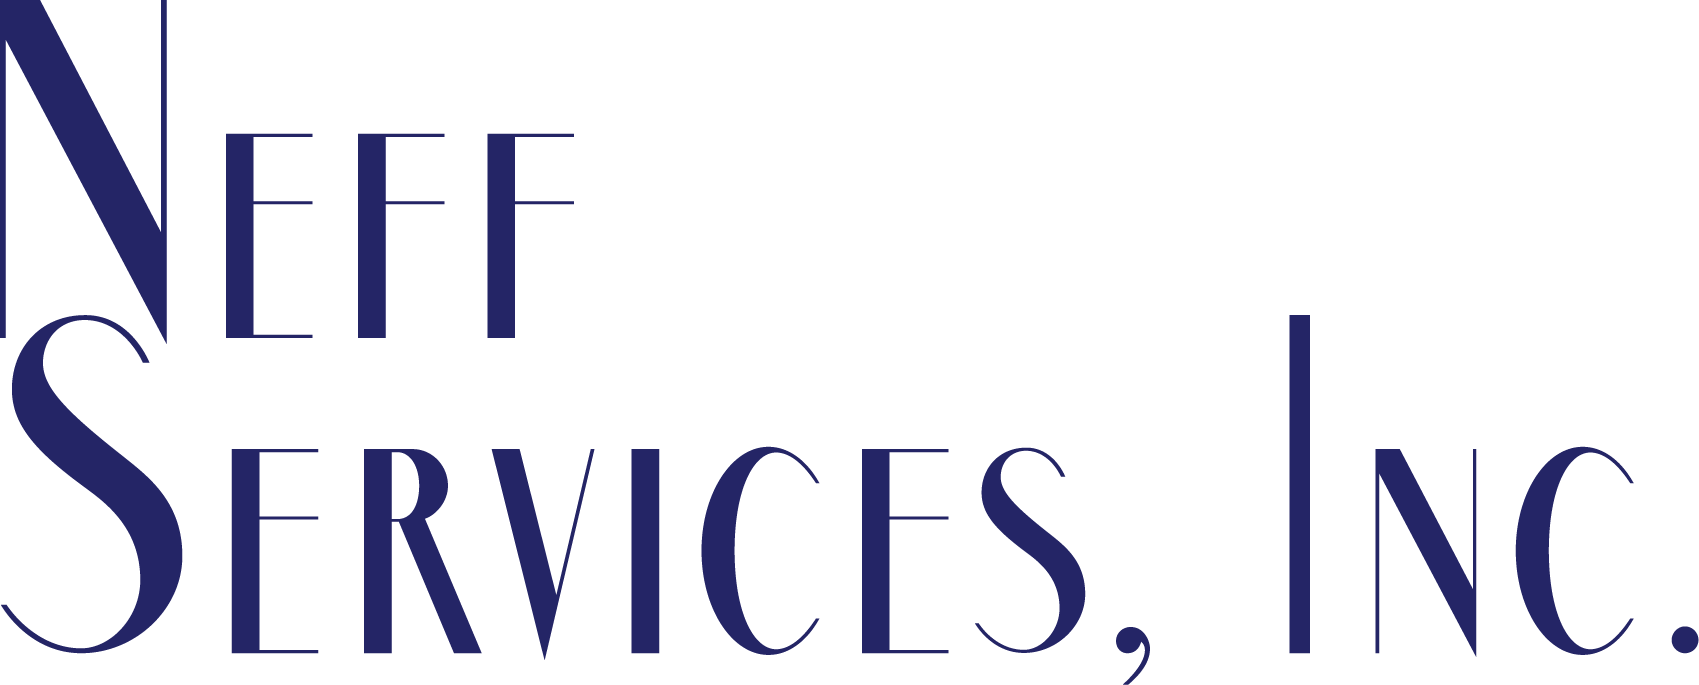 Neff Services